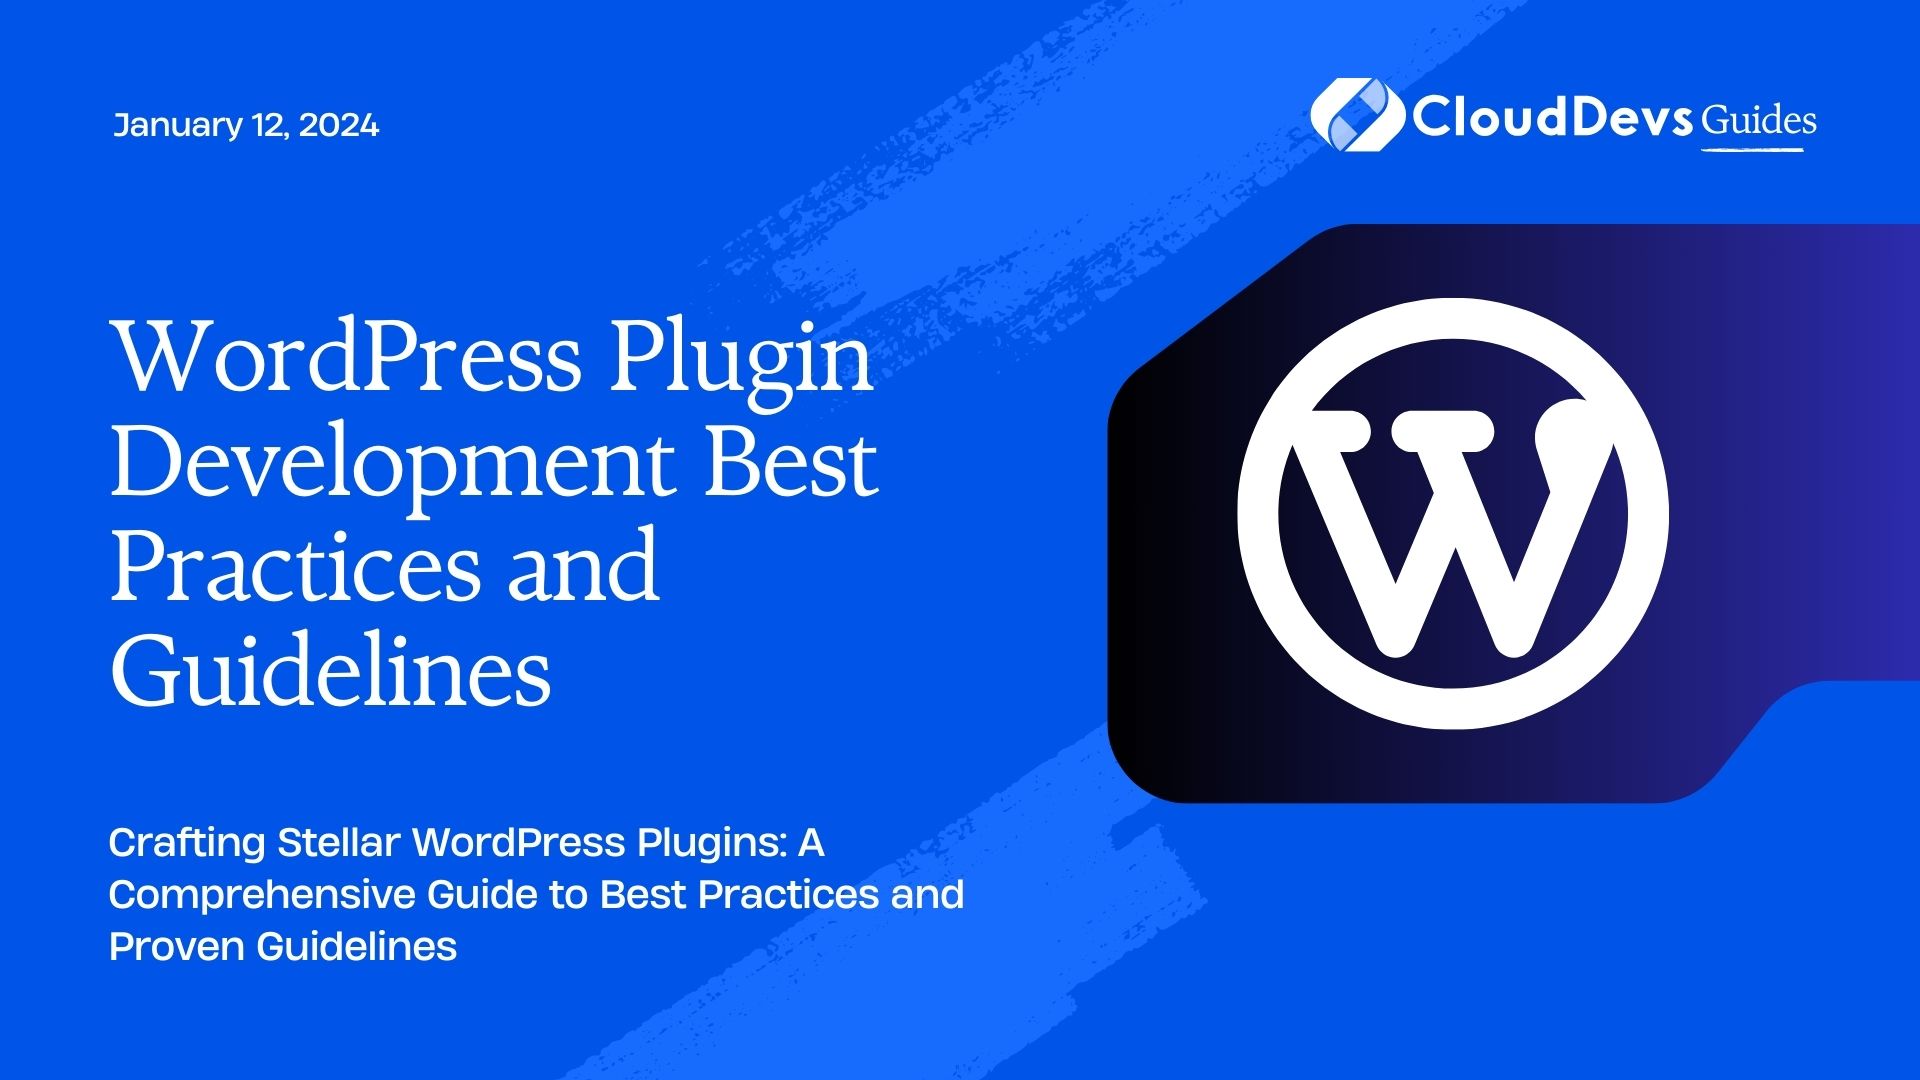 WordPress Plugin Development Best Practices and Guidelines